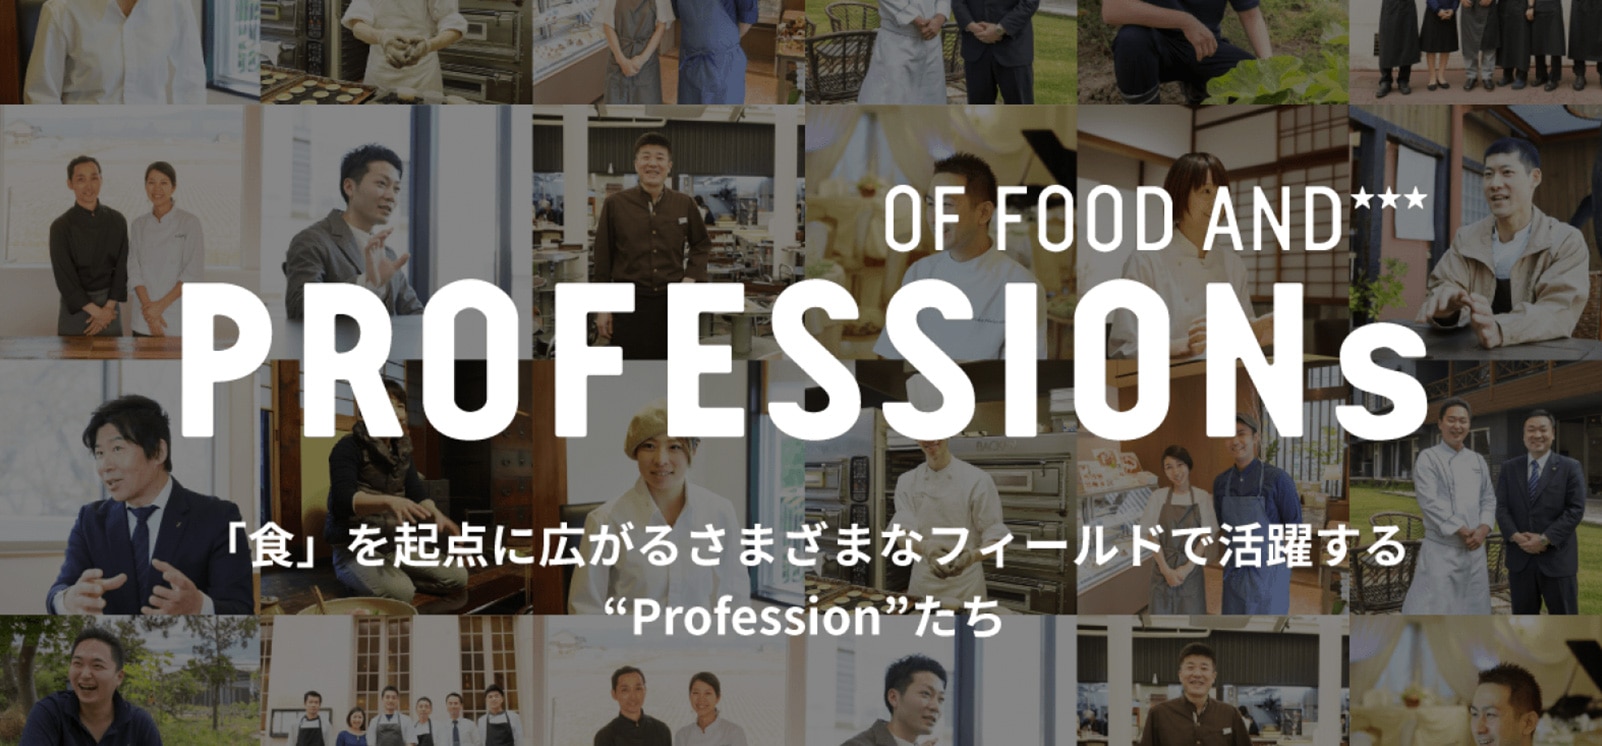 PROFESSIONS 「食業人」の活躍を発信するWebサイト